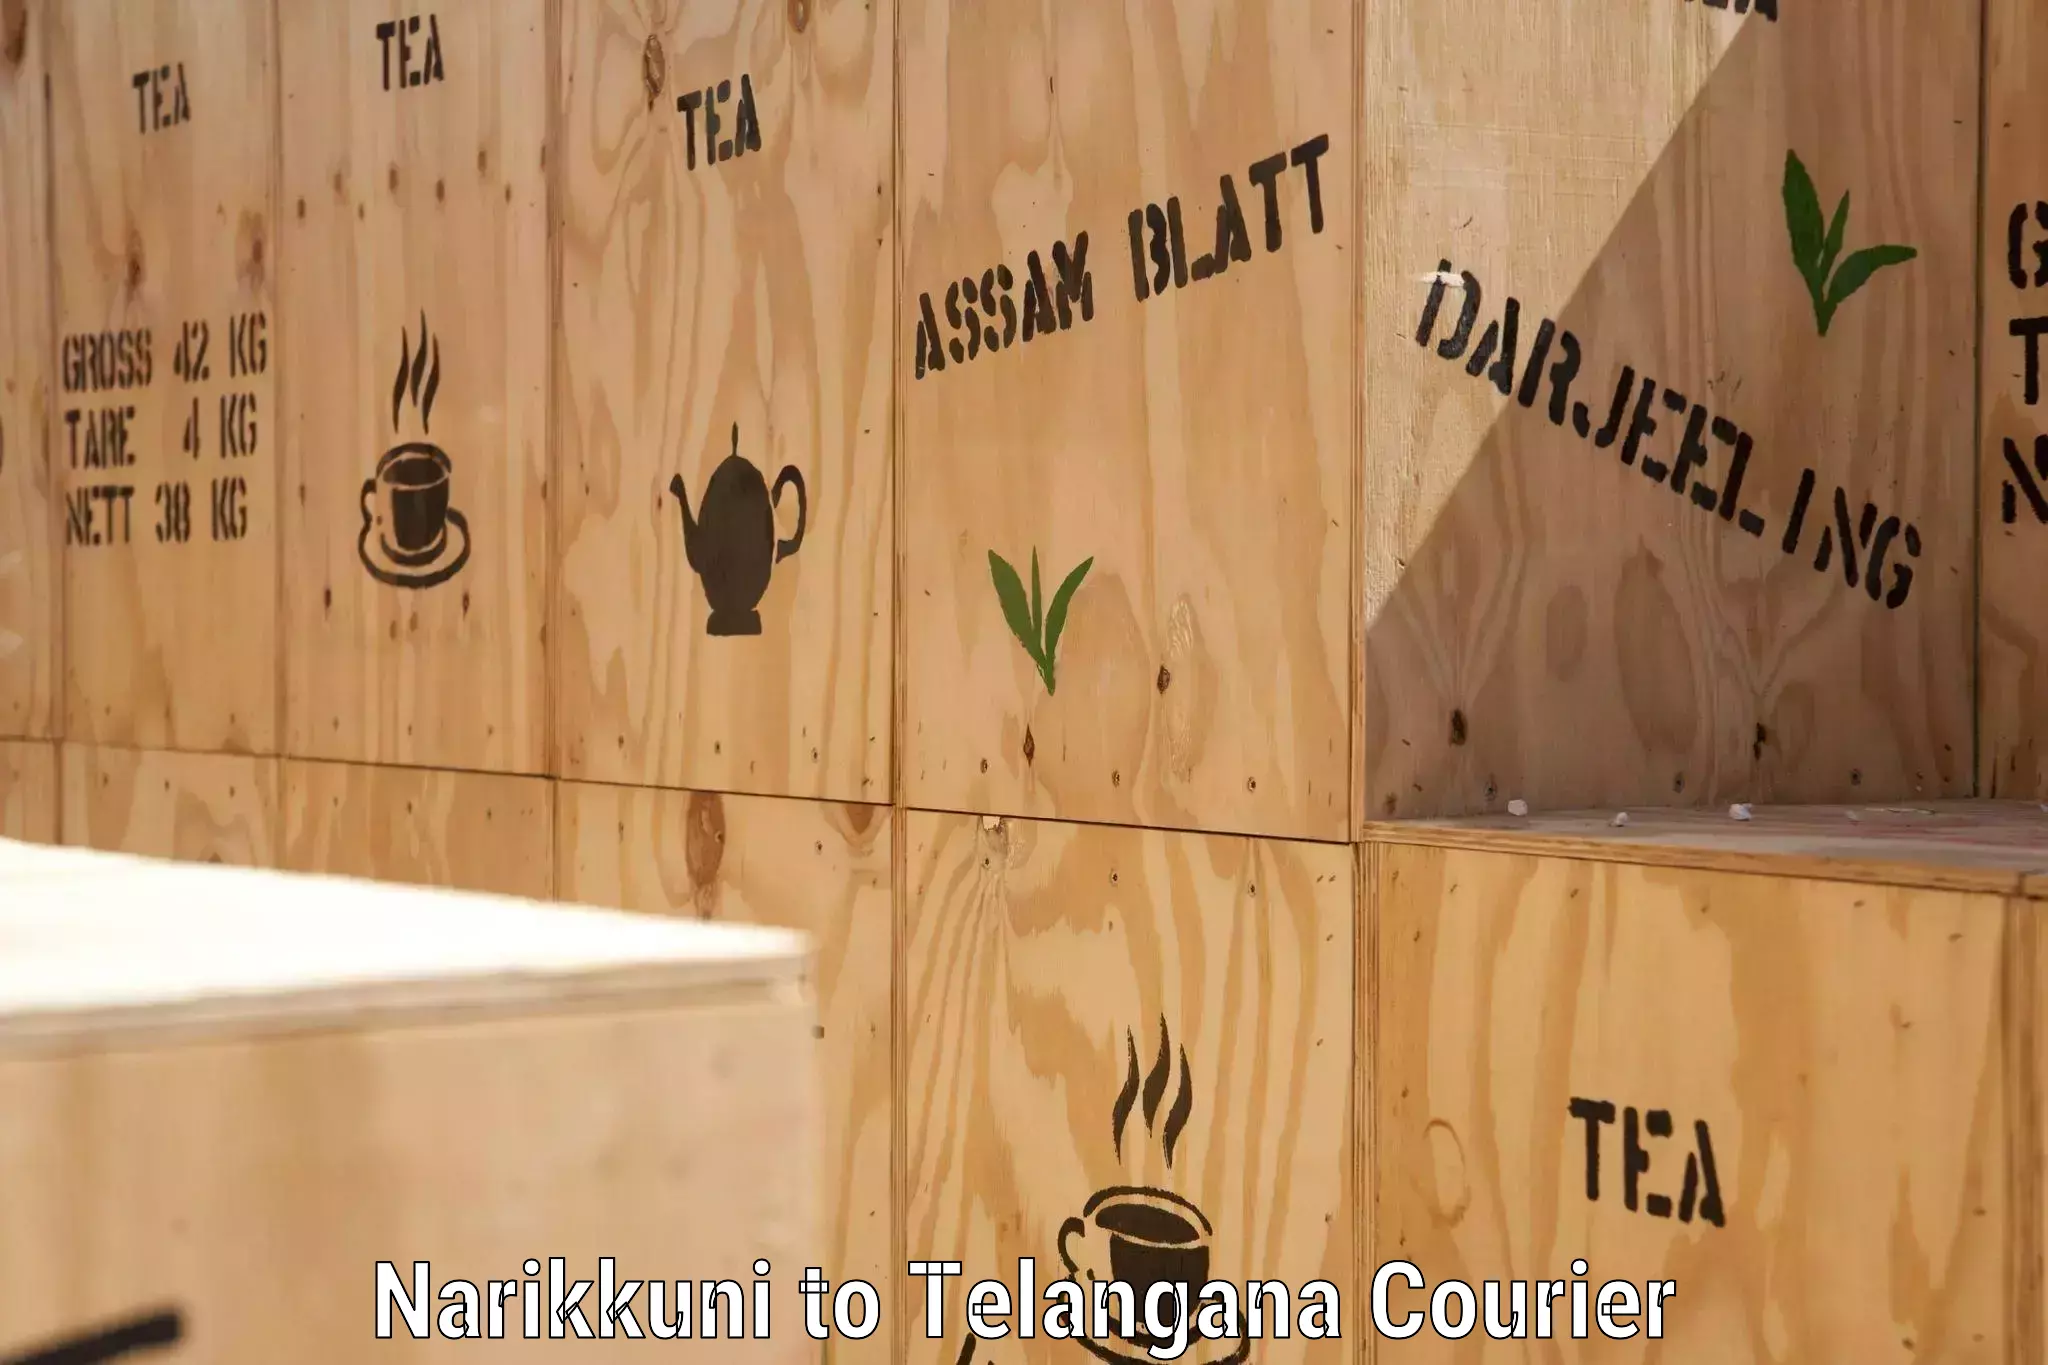 Reliable delivery network Narikkuni to Telangana